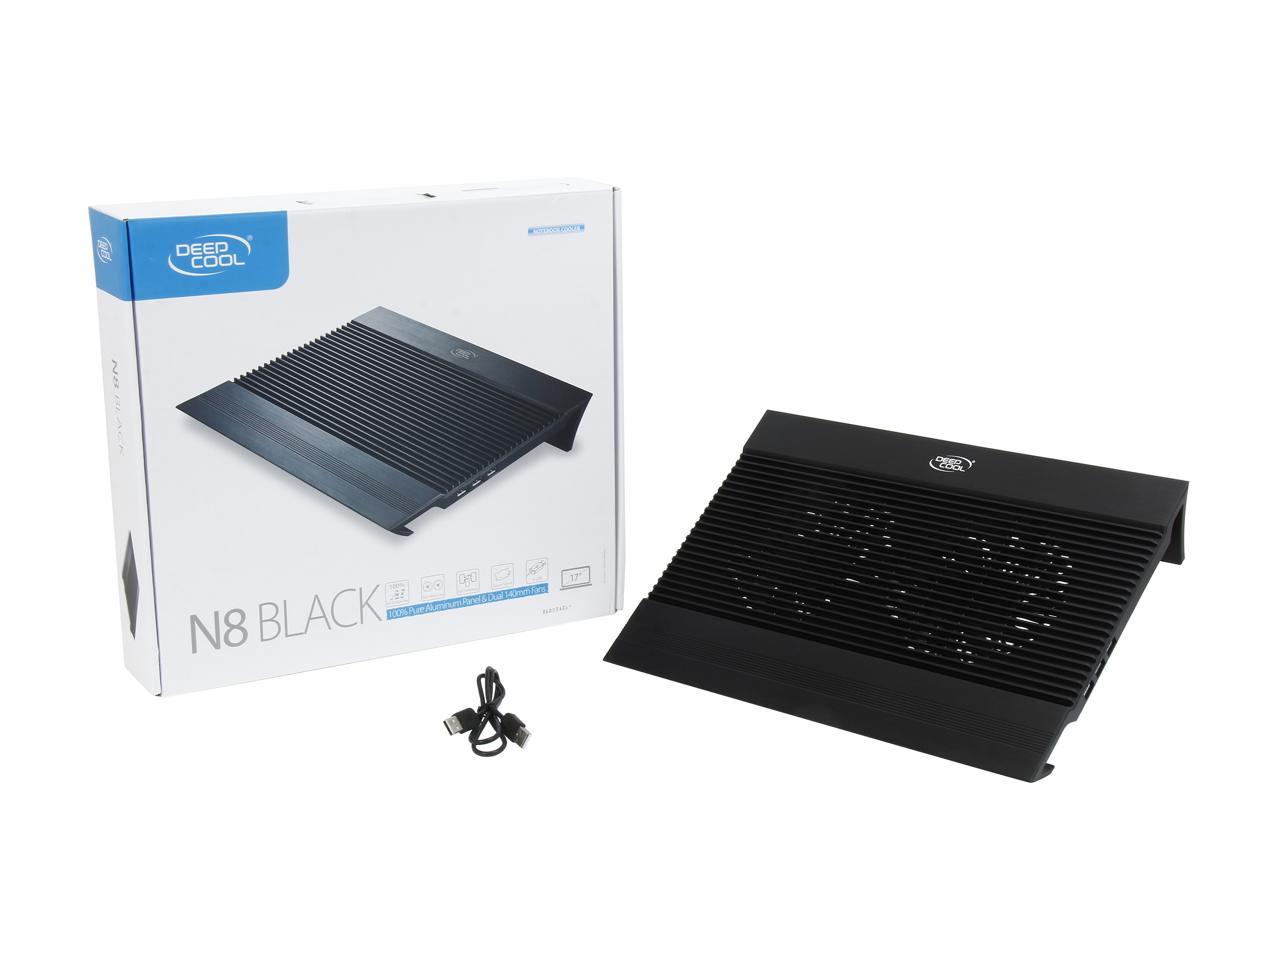 DEEPCOOL N8 Black Laptop Cooler 2.5mm Pure Aluminum Panel with Dual 140mm Fans 